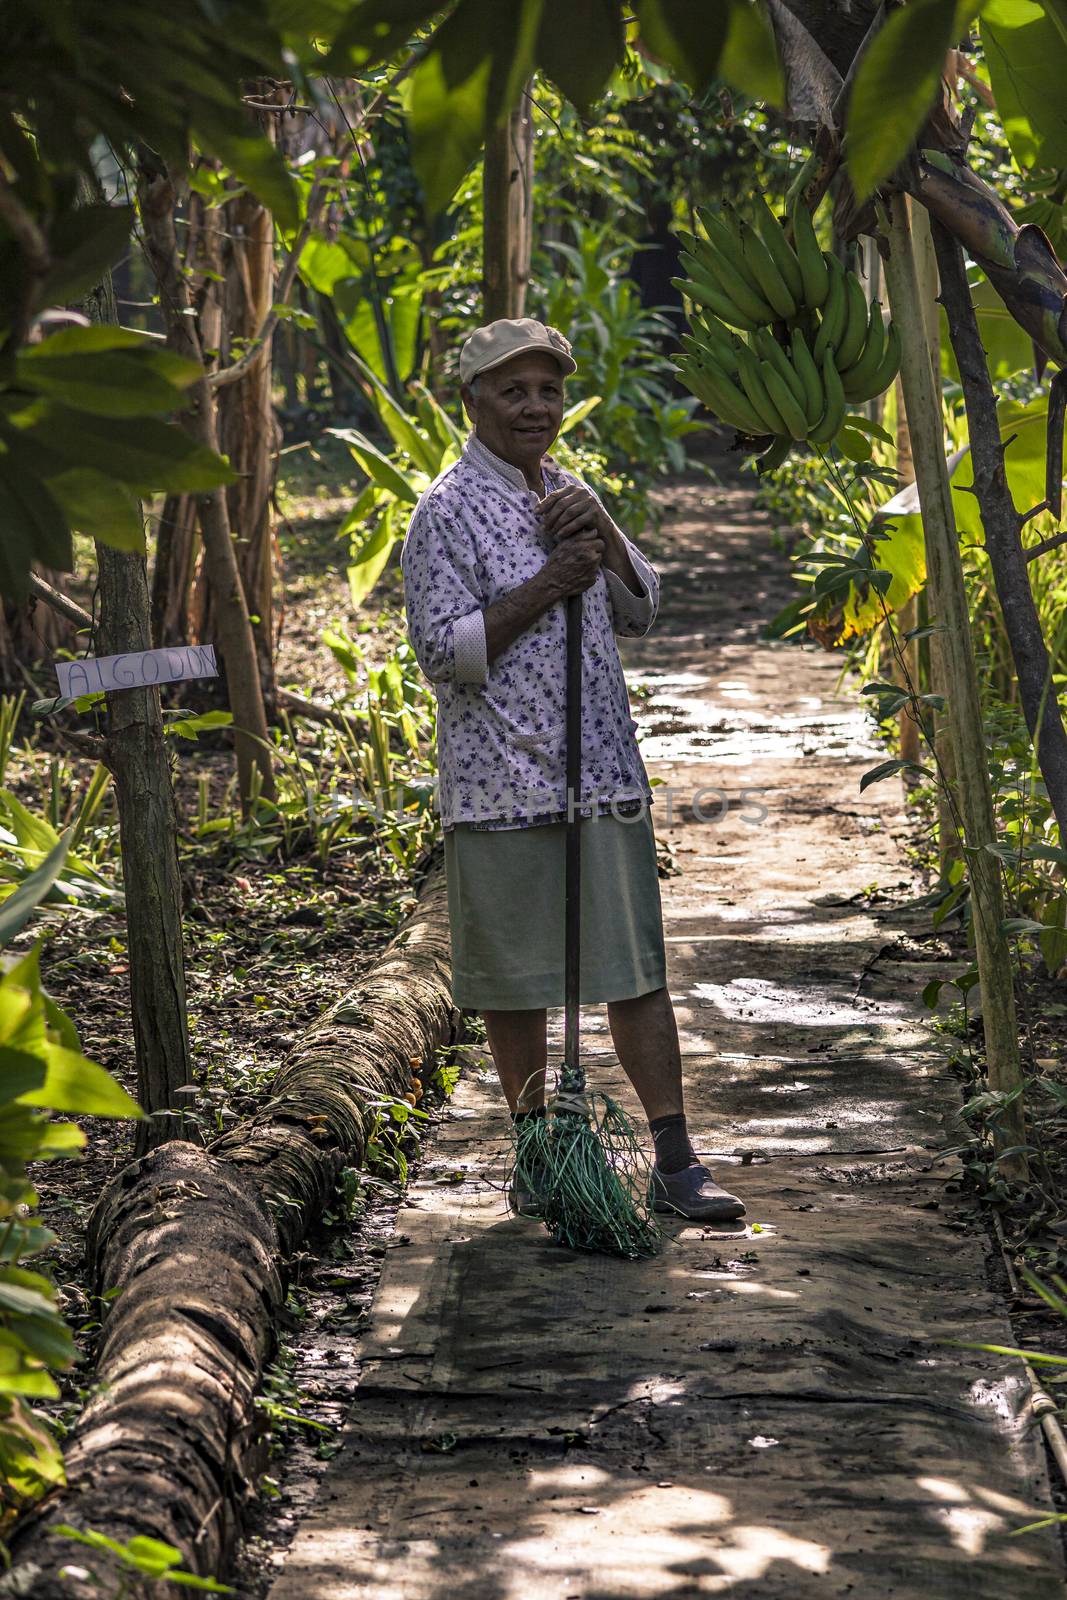 MONTANA REDONDA, DOMINICAN REPUBLIC 27 DECEMBER 2019: Man works in an avocado cultivation in the Dominican Republic